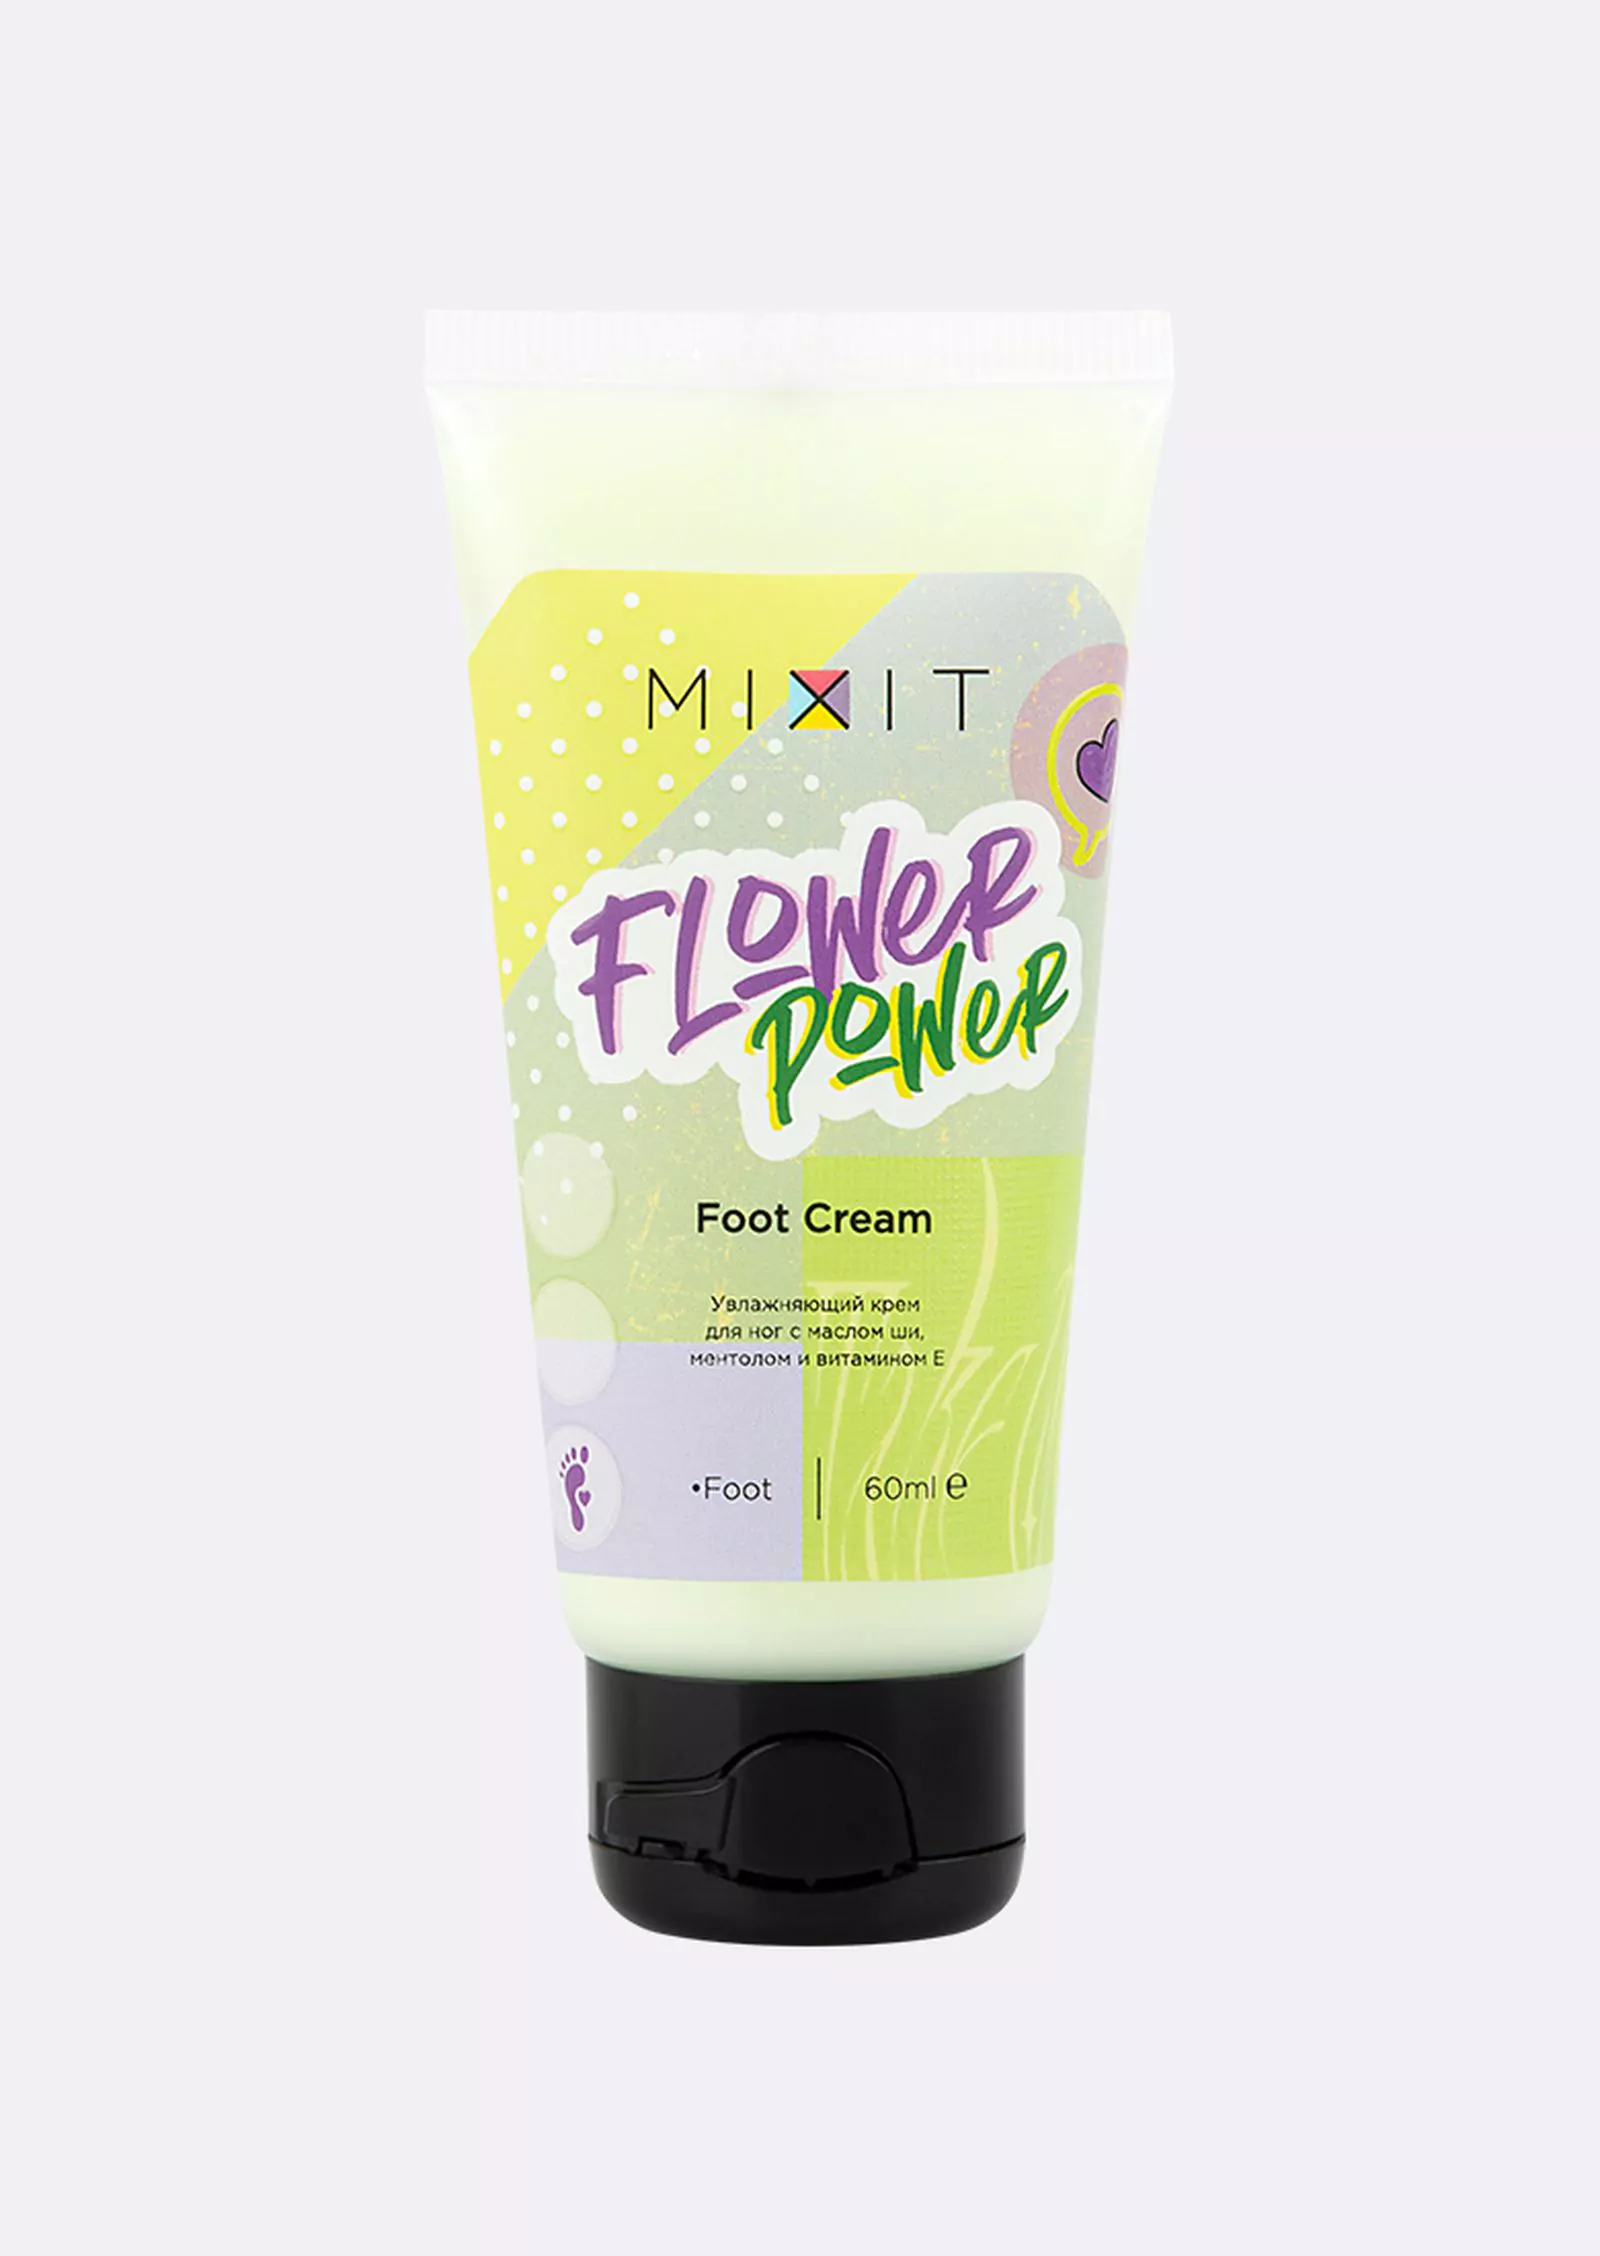 Mixit Flower Power Foot Cream